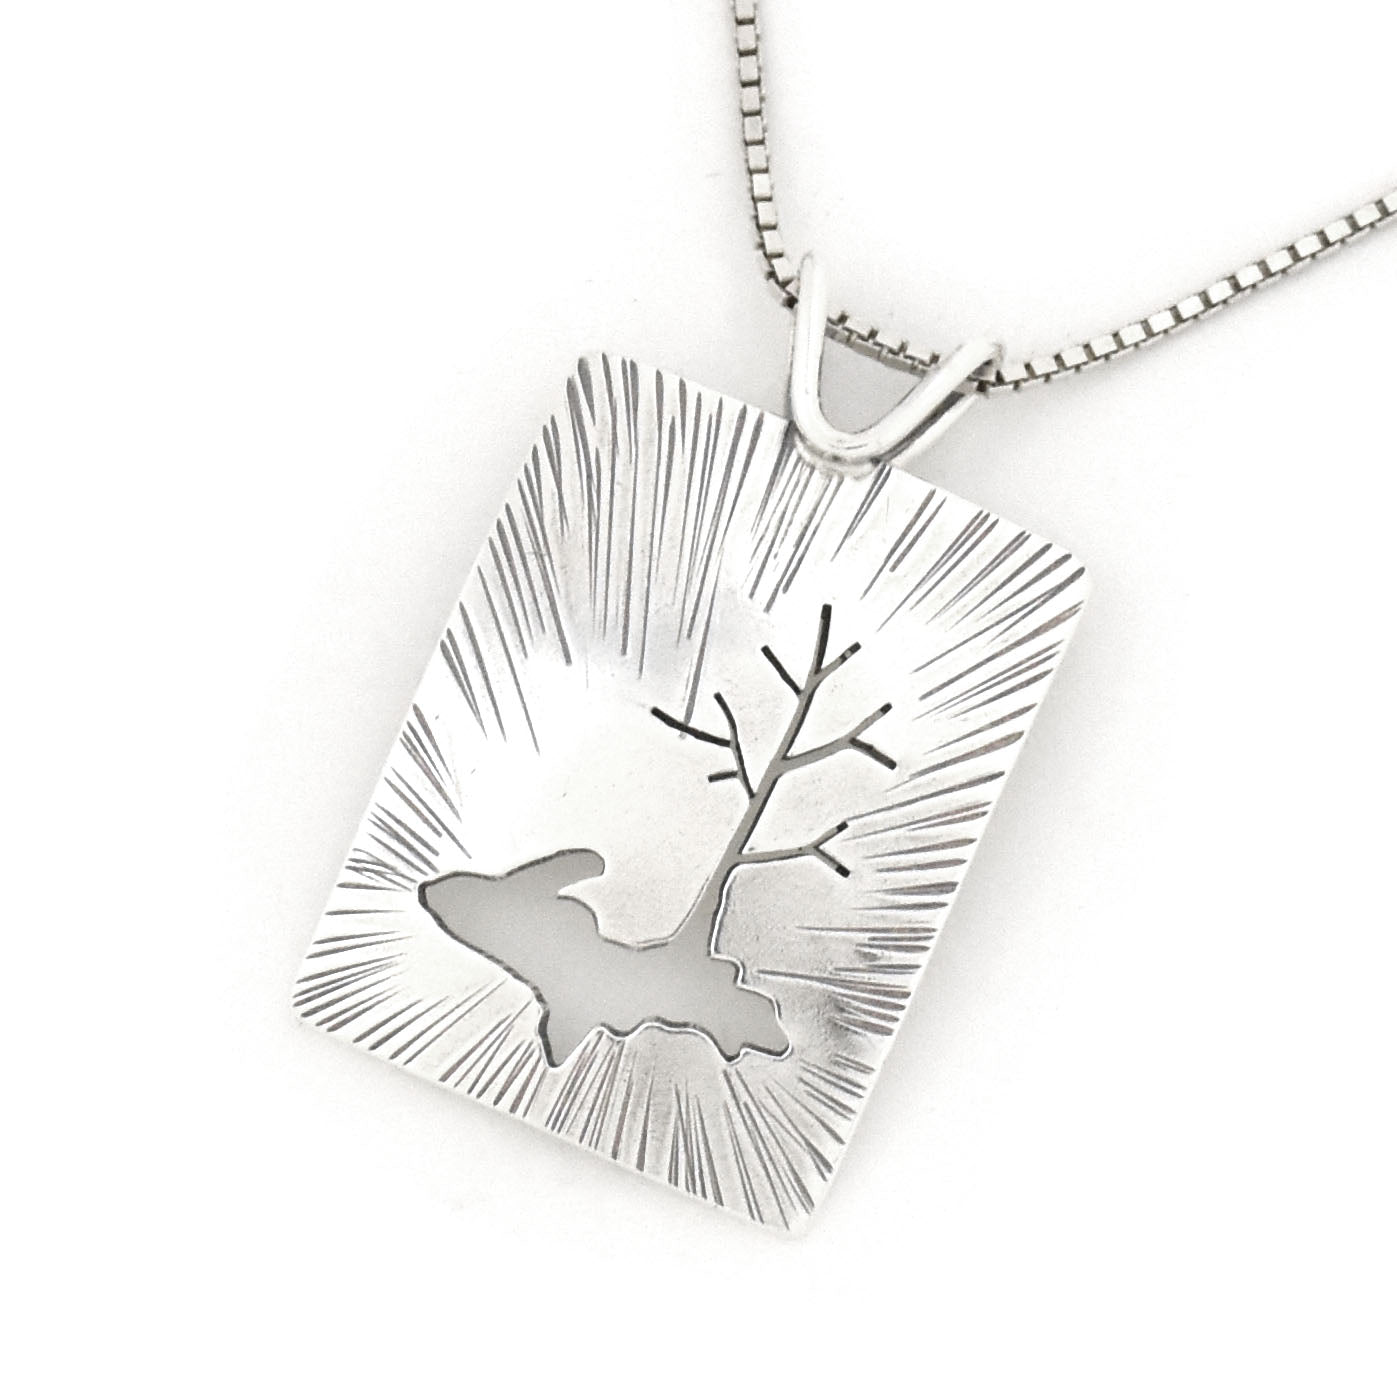 Radial Upper Peninsula Family Tree Silver Pendant - Silver Pendant   5790 - handmade by Beth Millner Jewelry